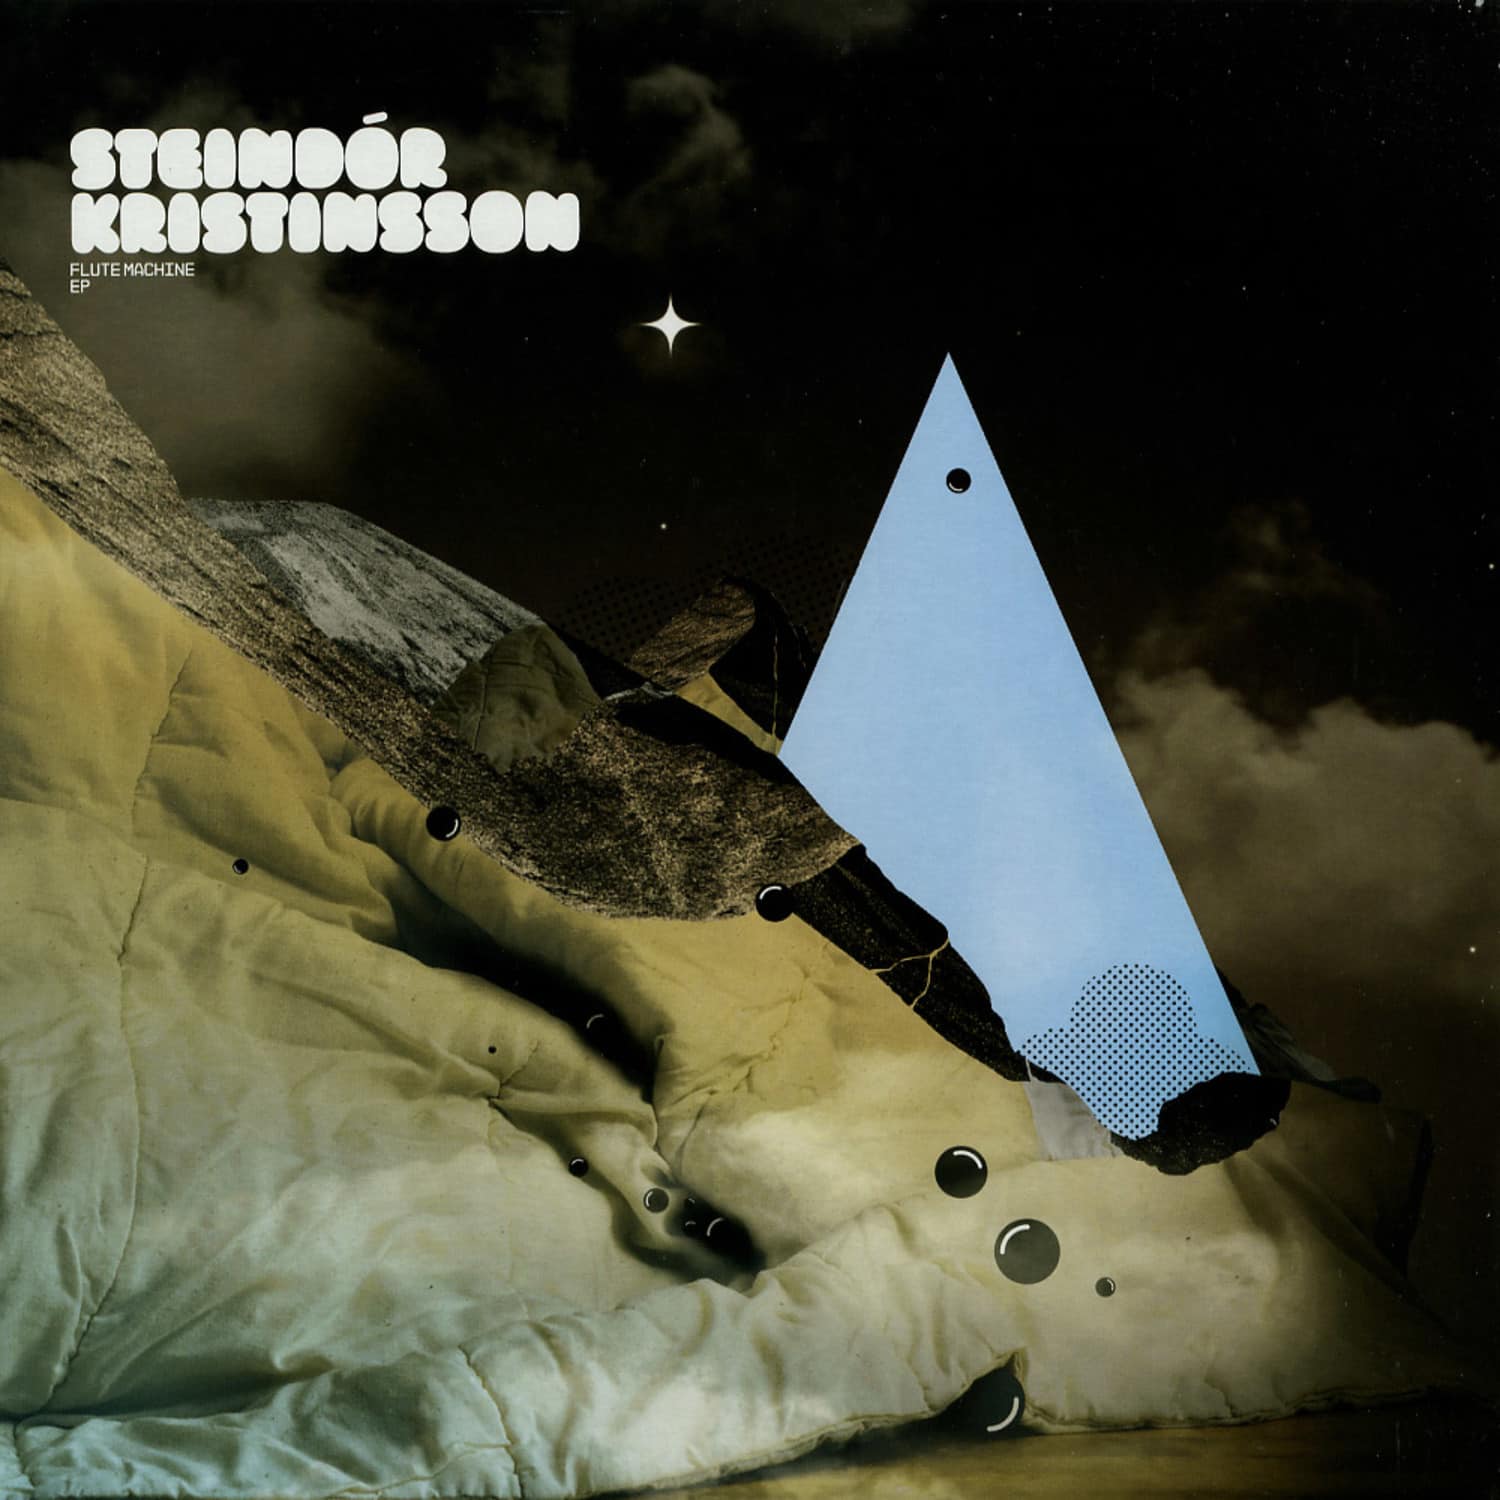 Steindor Kristinsson - FLUTE MACHINE EP 